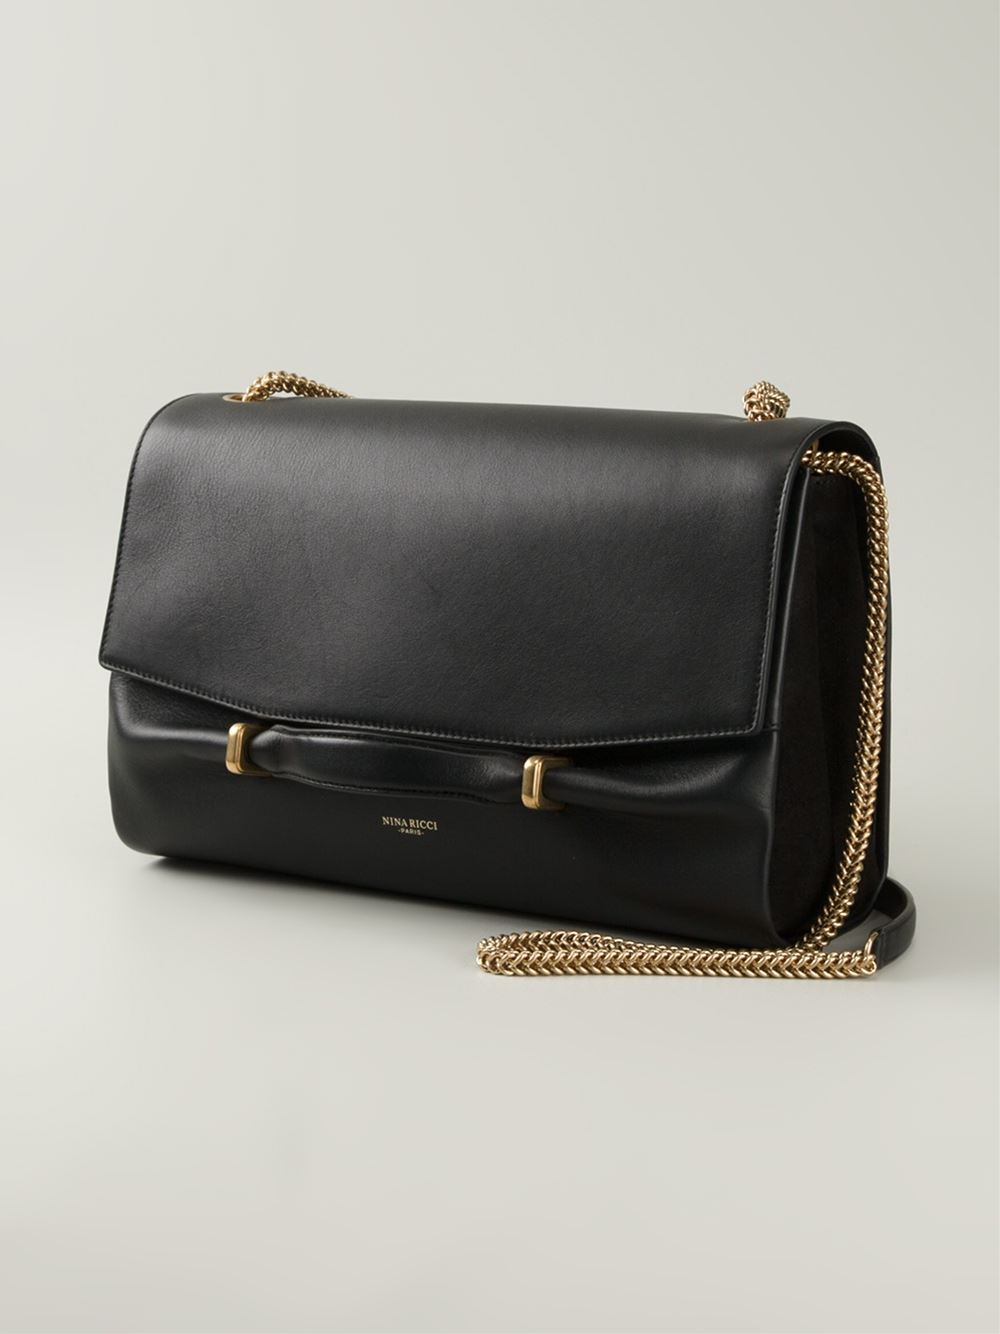 Nina Ricci Marché Chaine Medium Leather Shoulder Bag in Black | Lyst